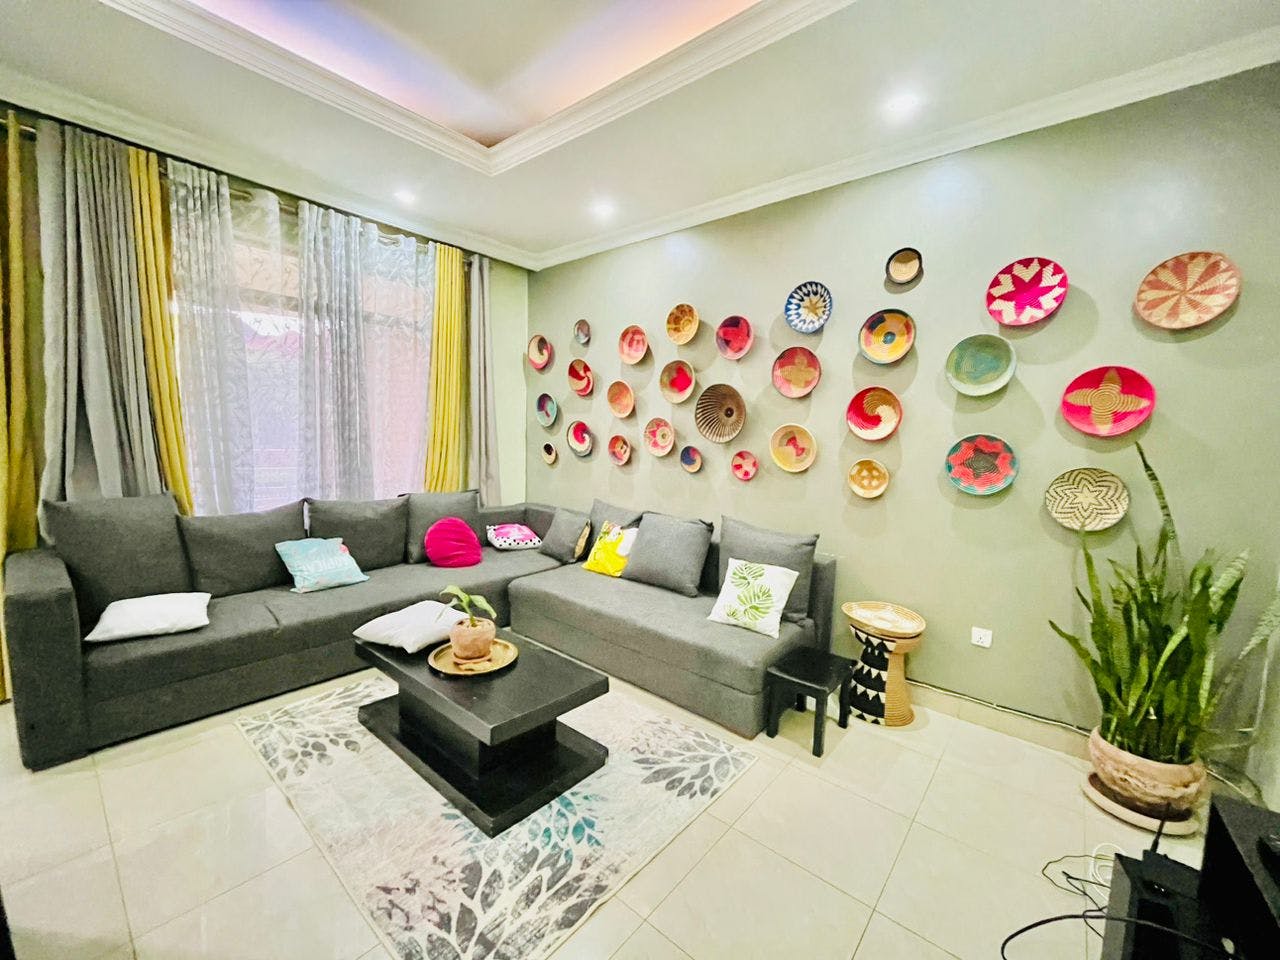 K007_Kibagabaga beautiful fully furnished apartment for rent 